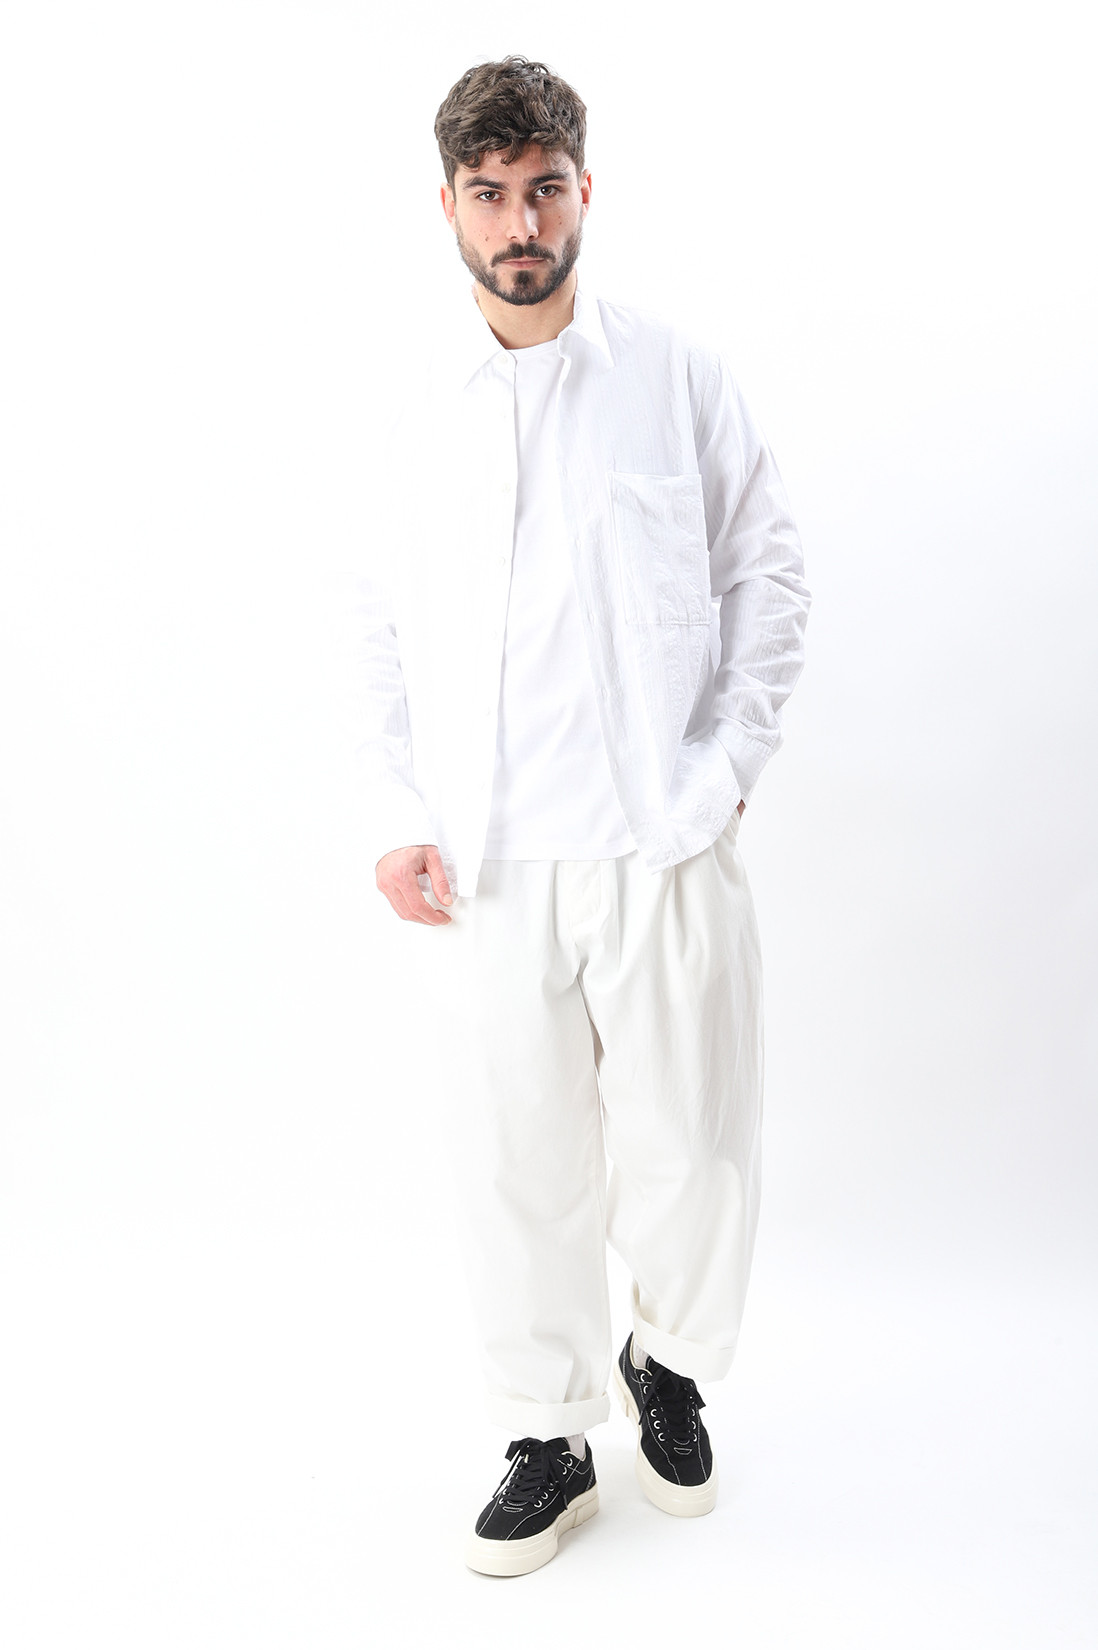 Pocket shirt cotton square White